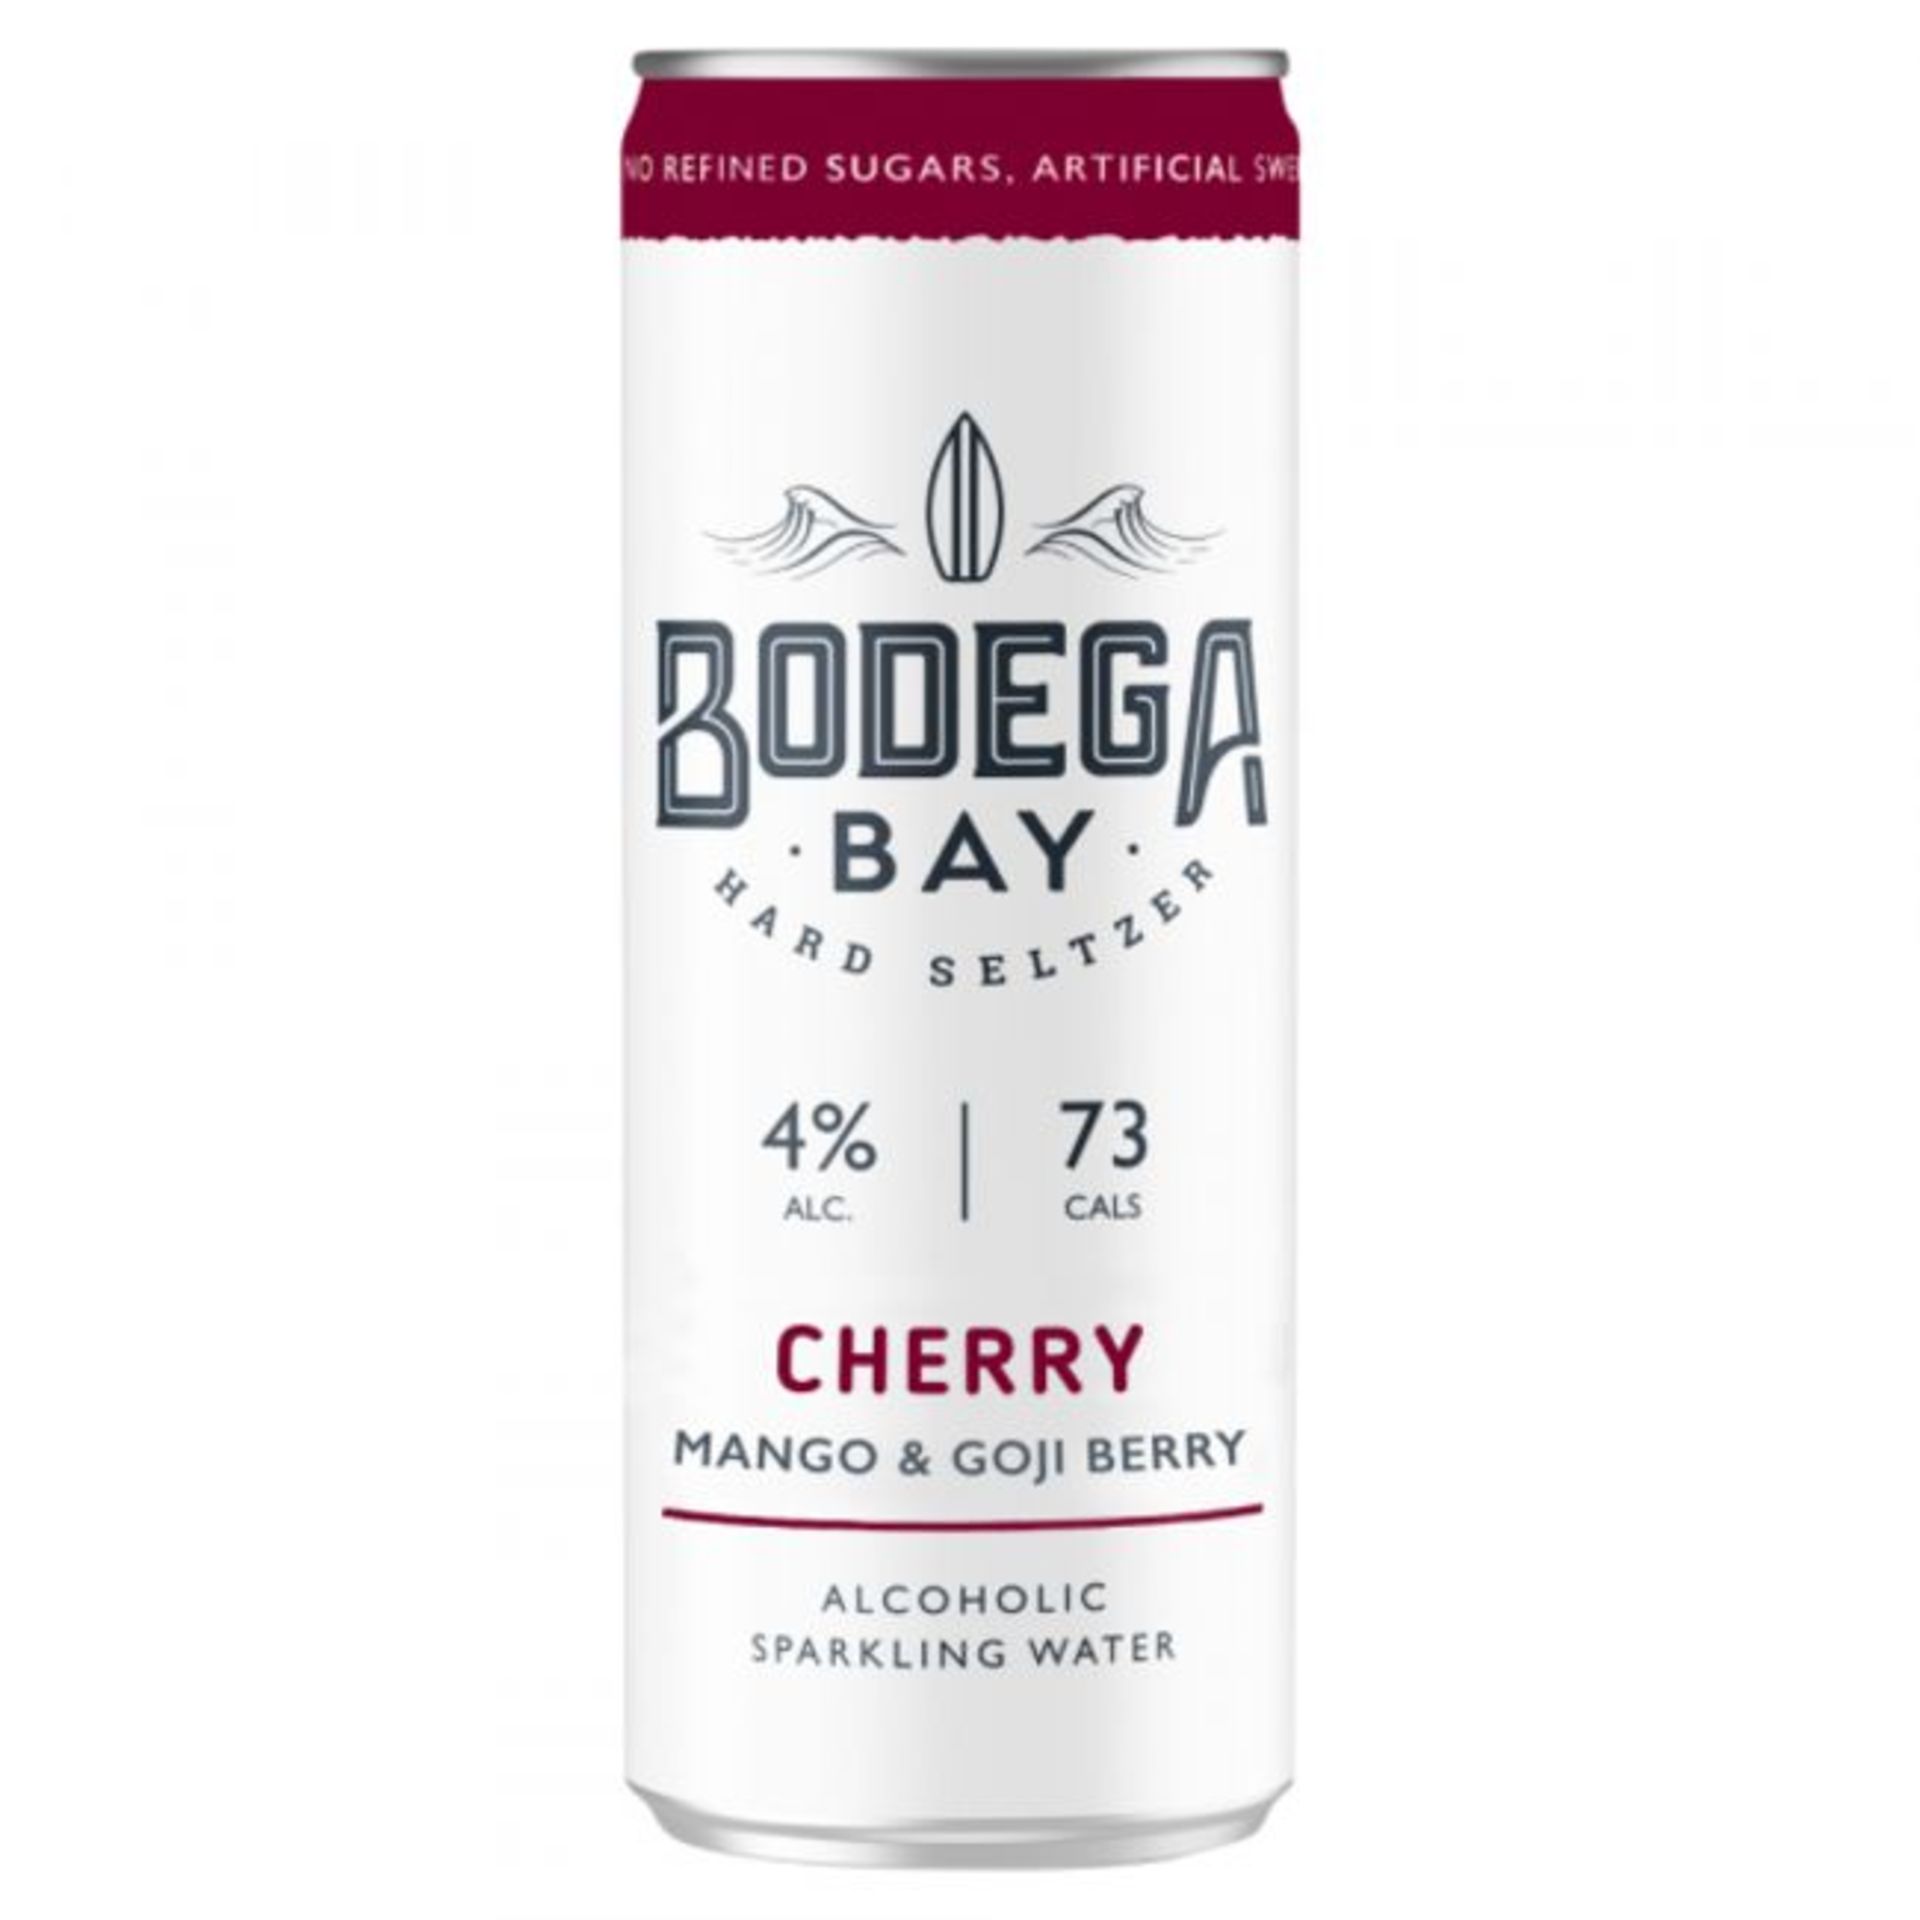 24 x Bodega Bay Hard Seltzer 250ml Alcoholic Sparkling Water Drinks - Cherry Mango & Goji Berry - 4% - Image 6 of 6